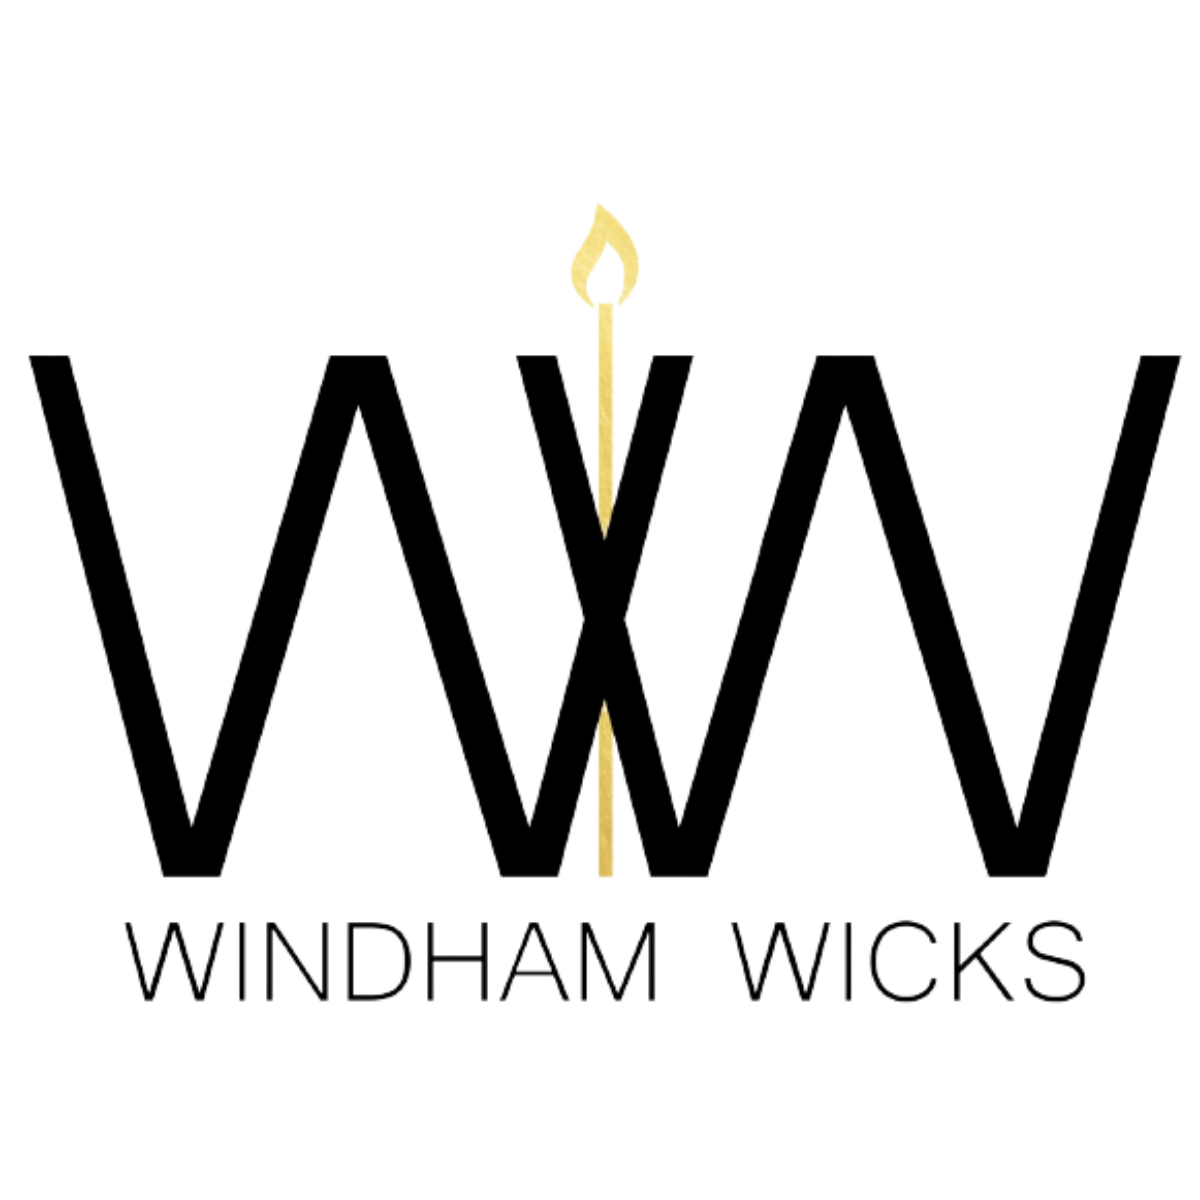 Windham Wicks